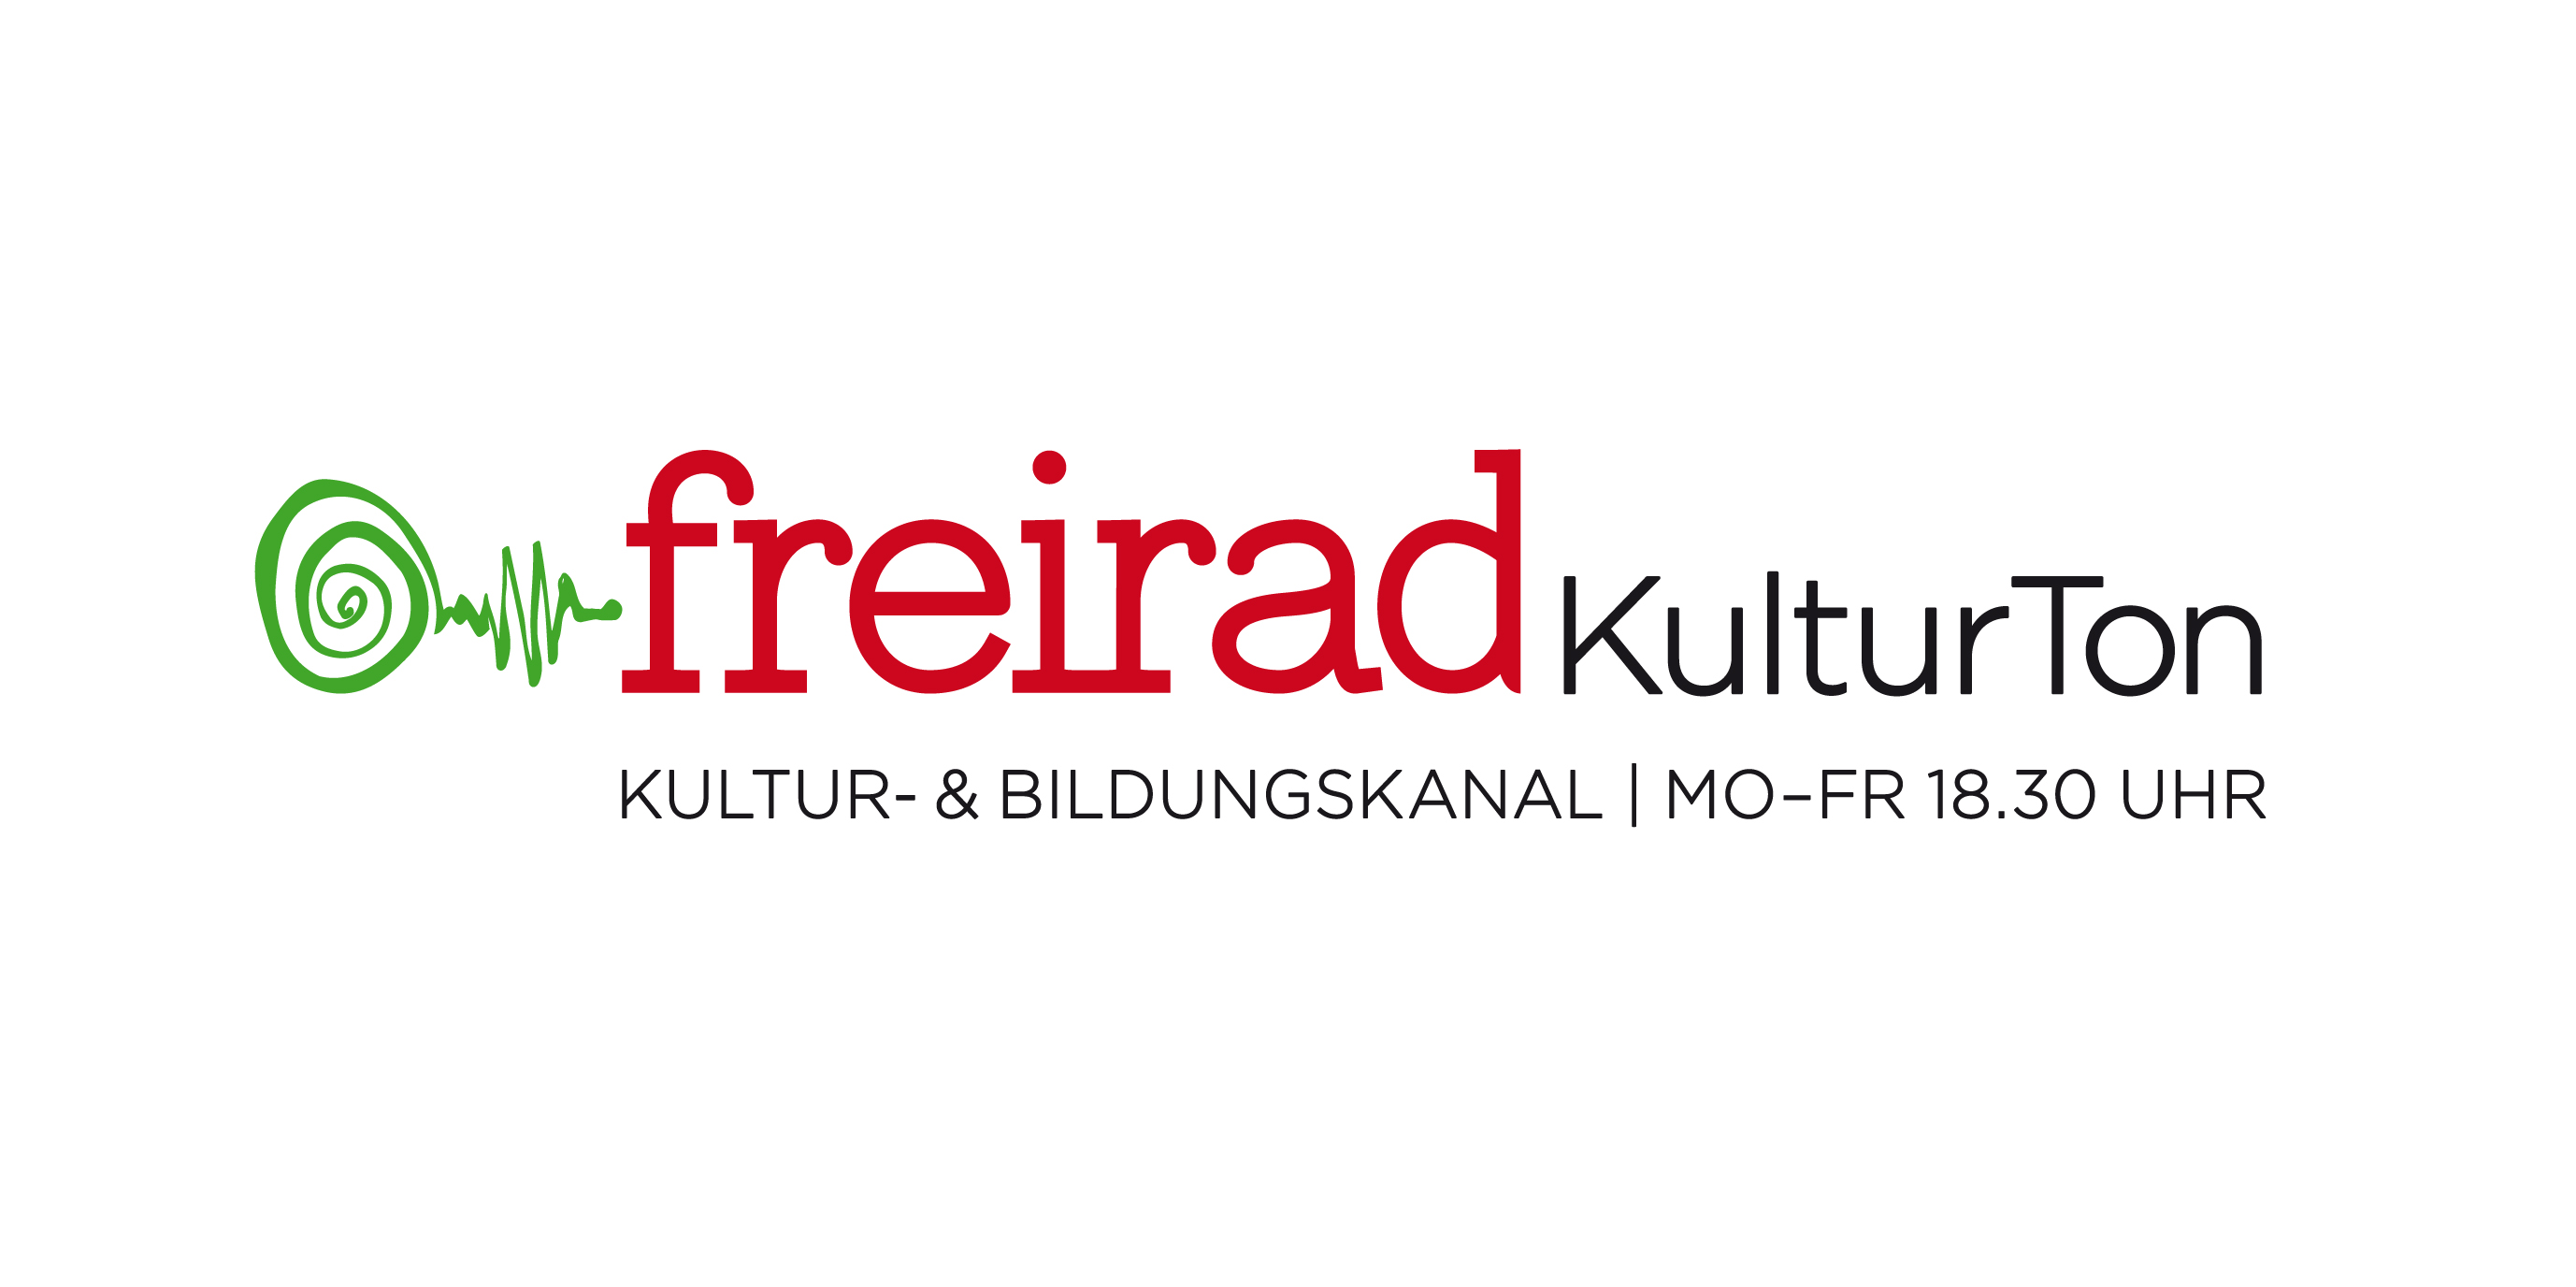 freirad-logo-neu-kulturton-farbig-auf-weiss